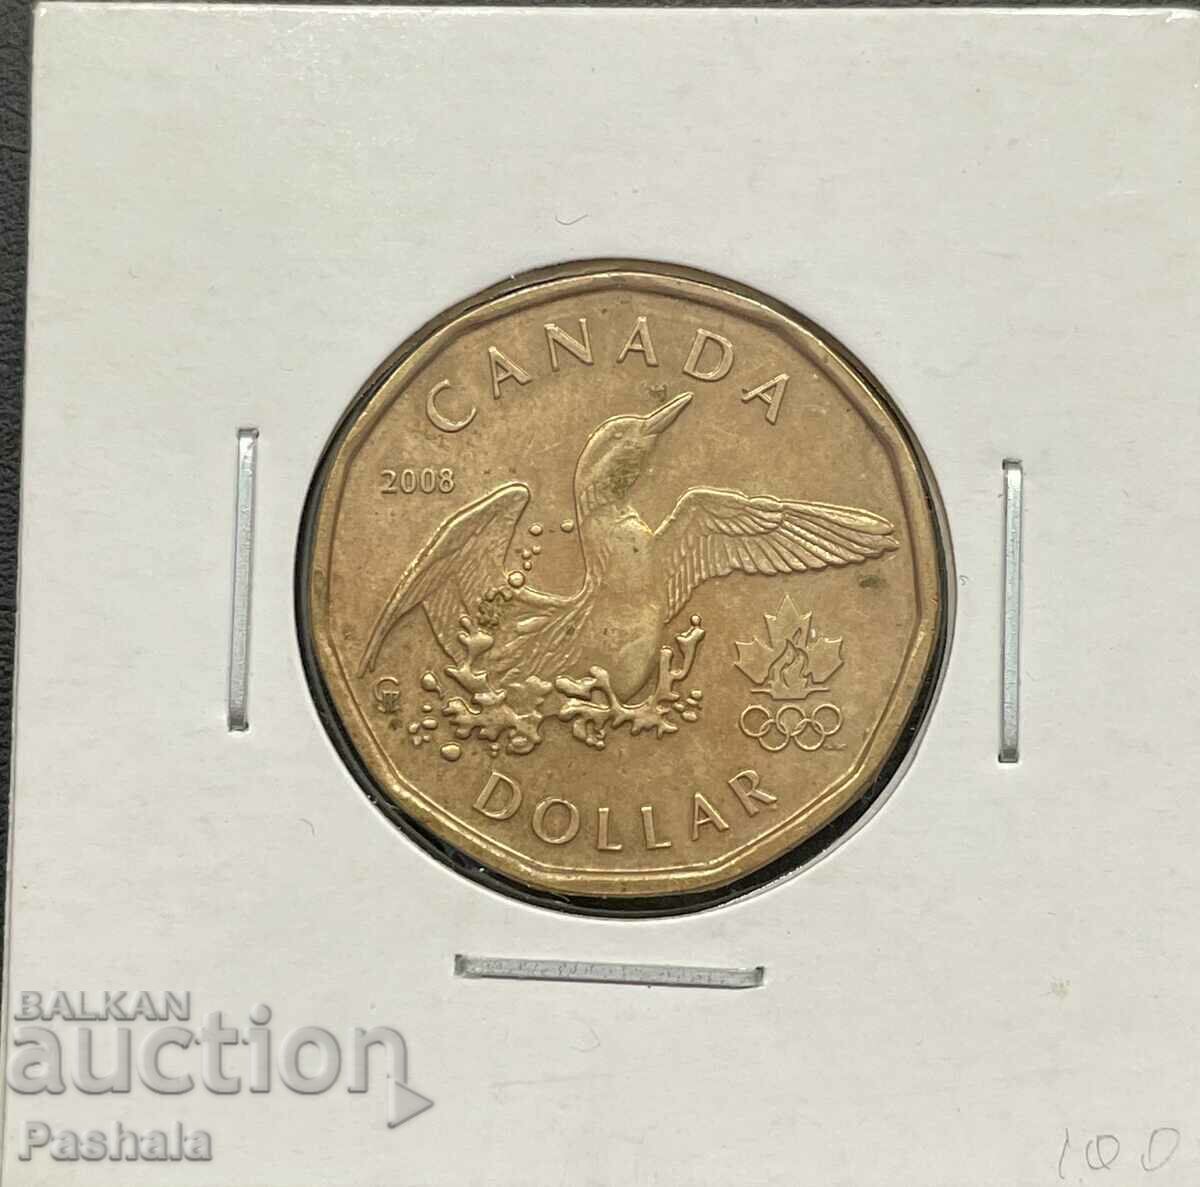 Canada 1 USD 2008